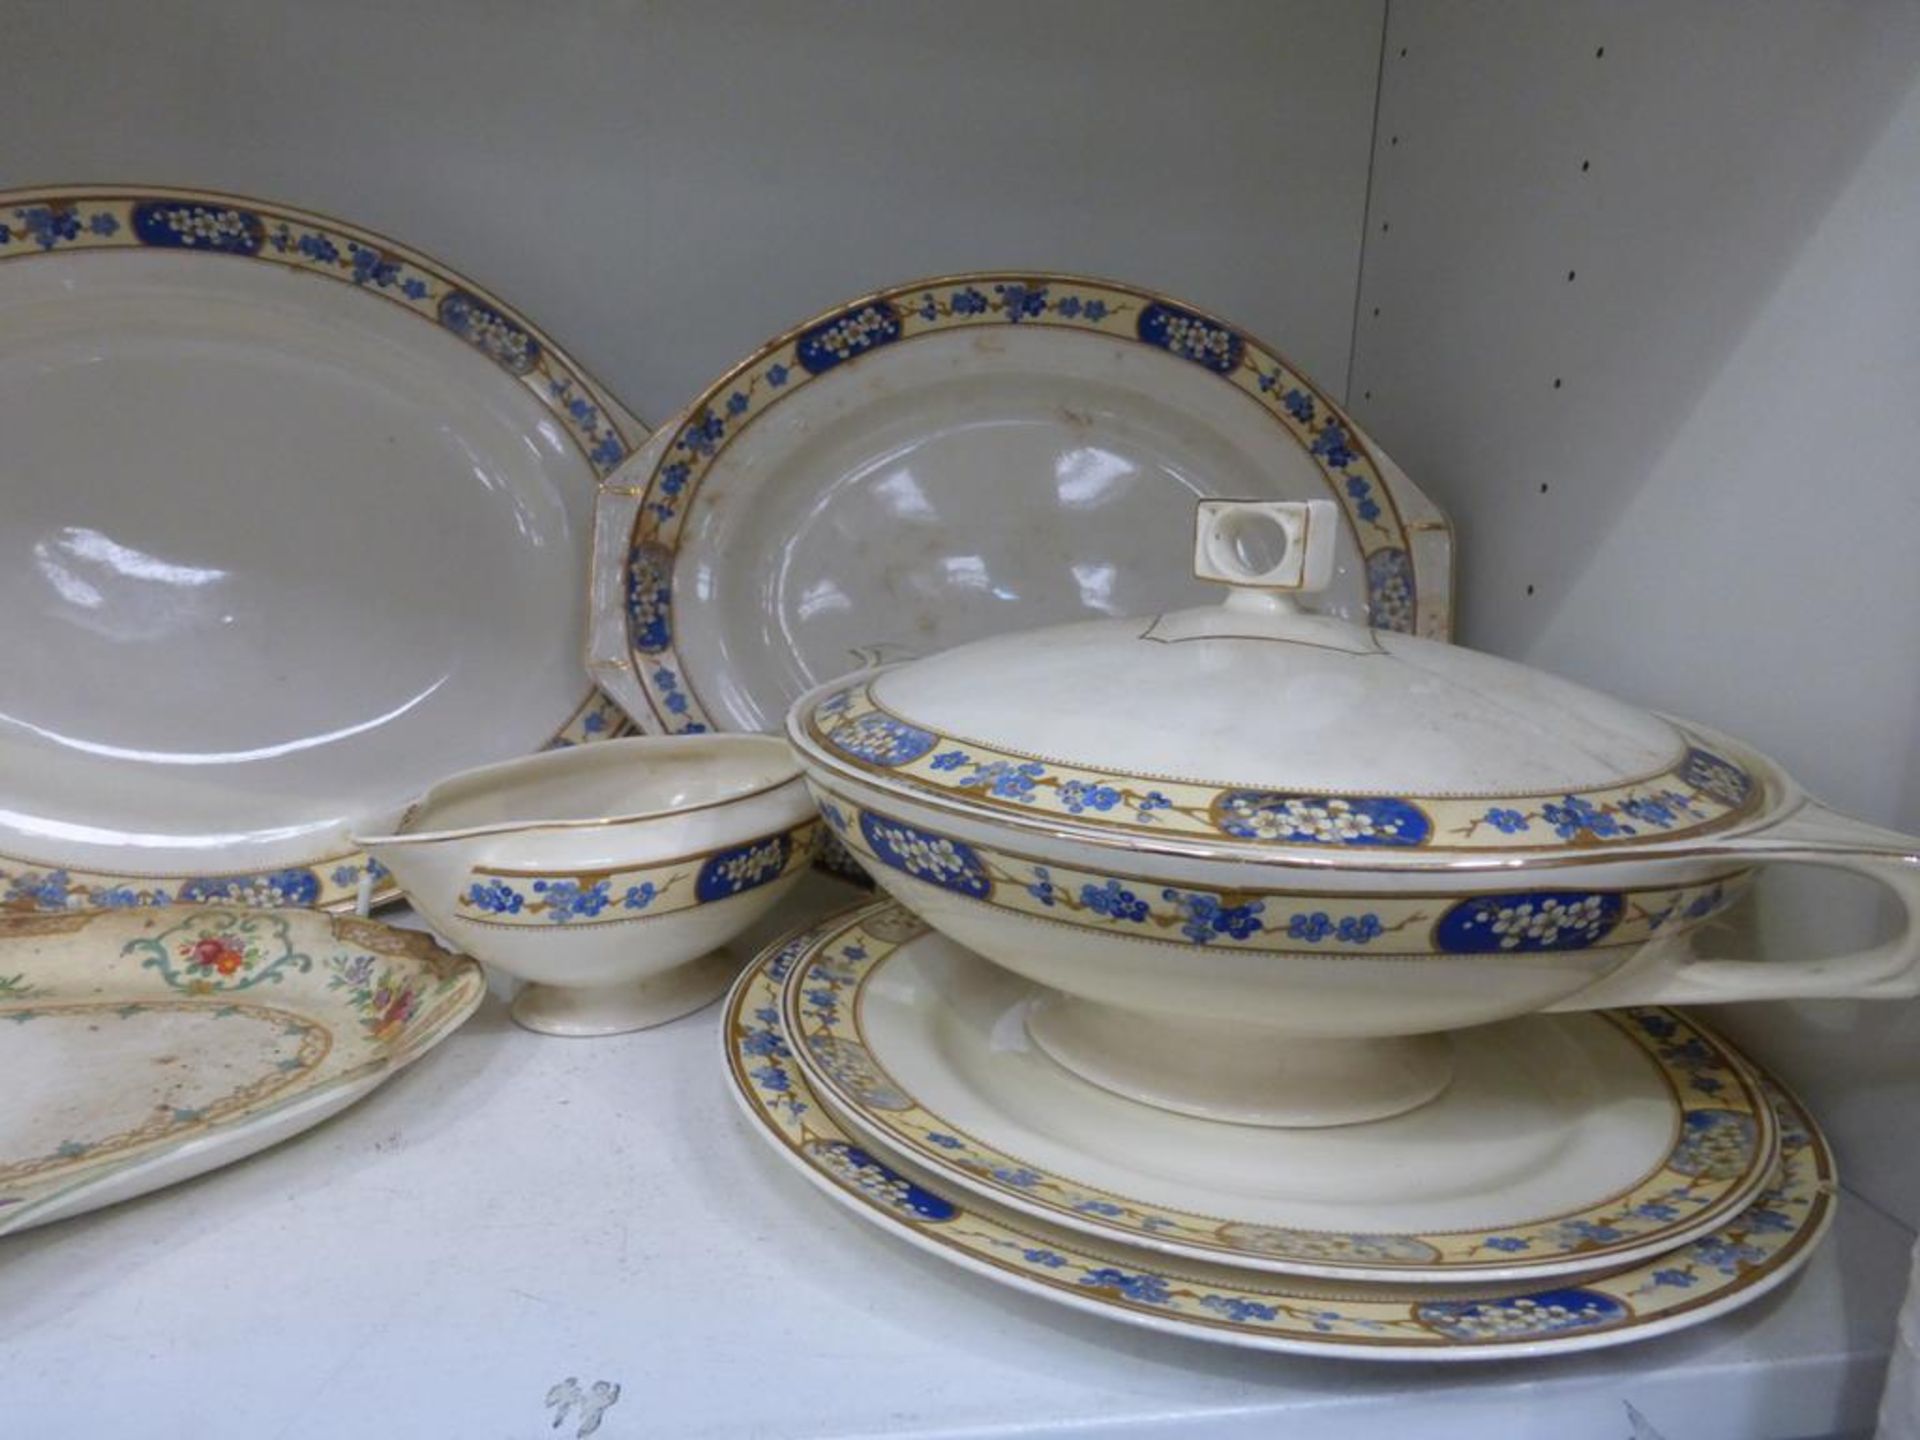 Meakin Dinnerware, Oriental Puzzle Box, Royalty Commemorative Mugs etc. (est £20-£30) - Image 3 of 6